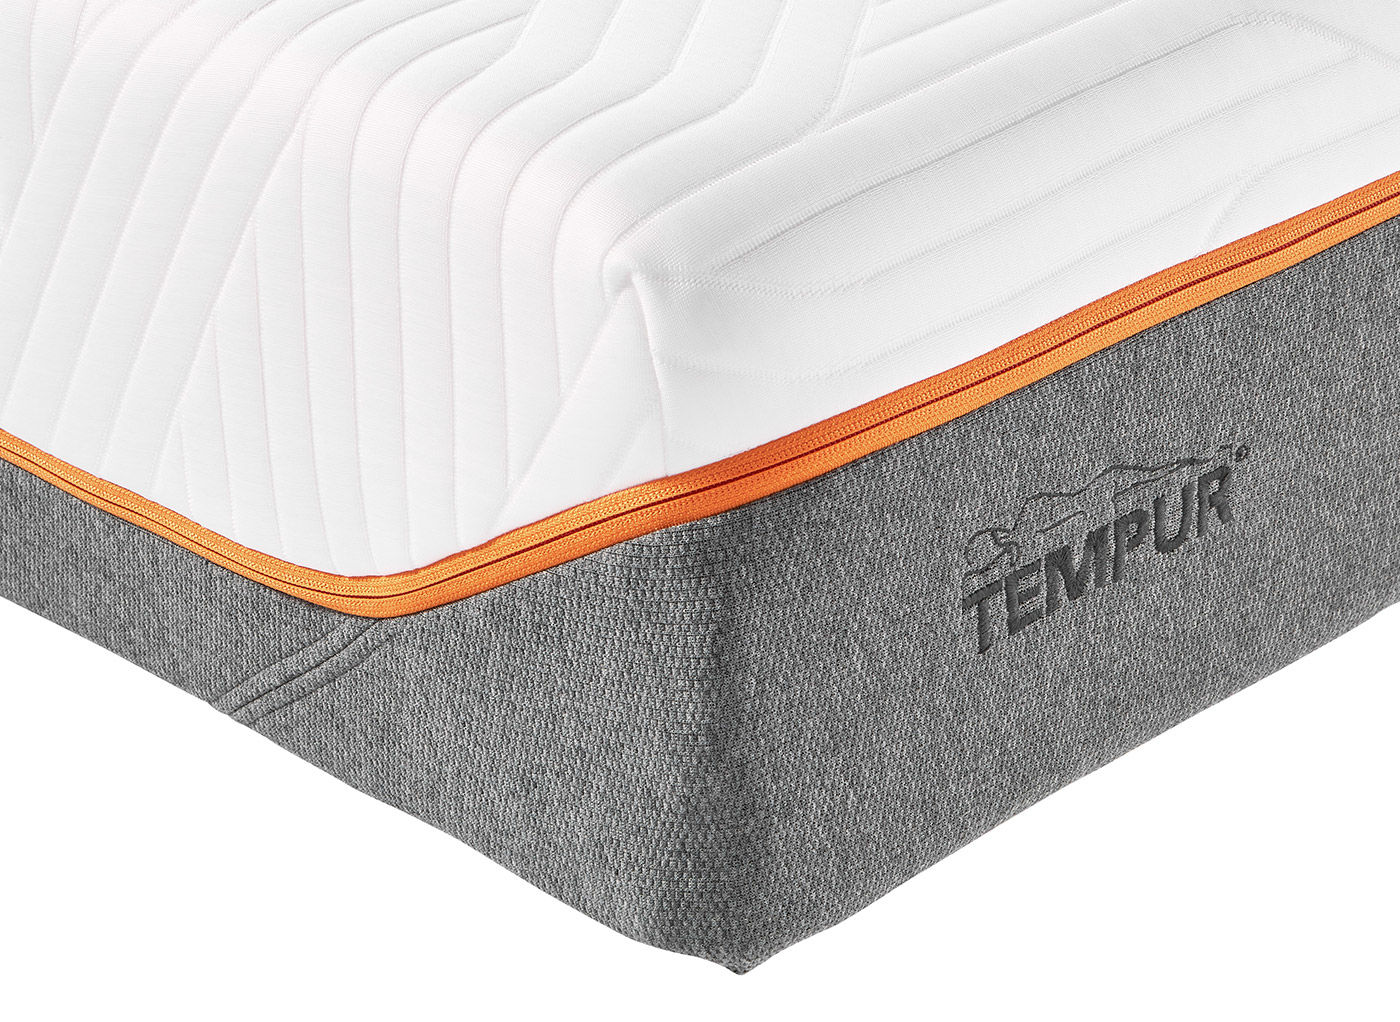 tempur cooltouch king size mattress